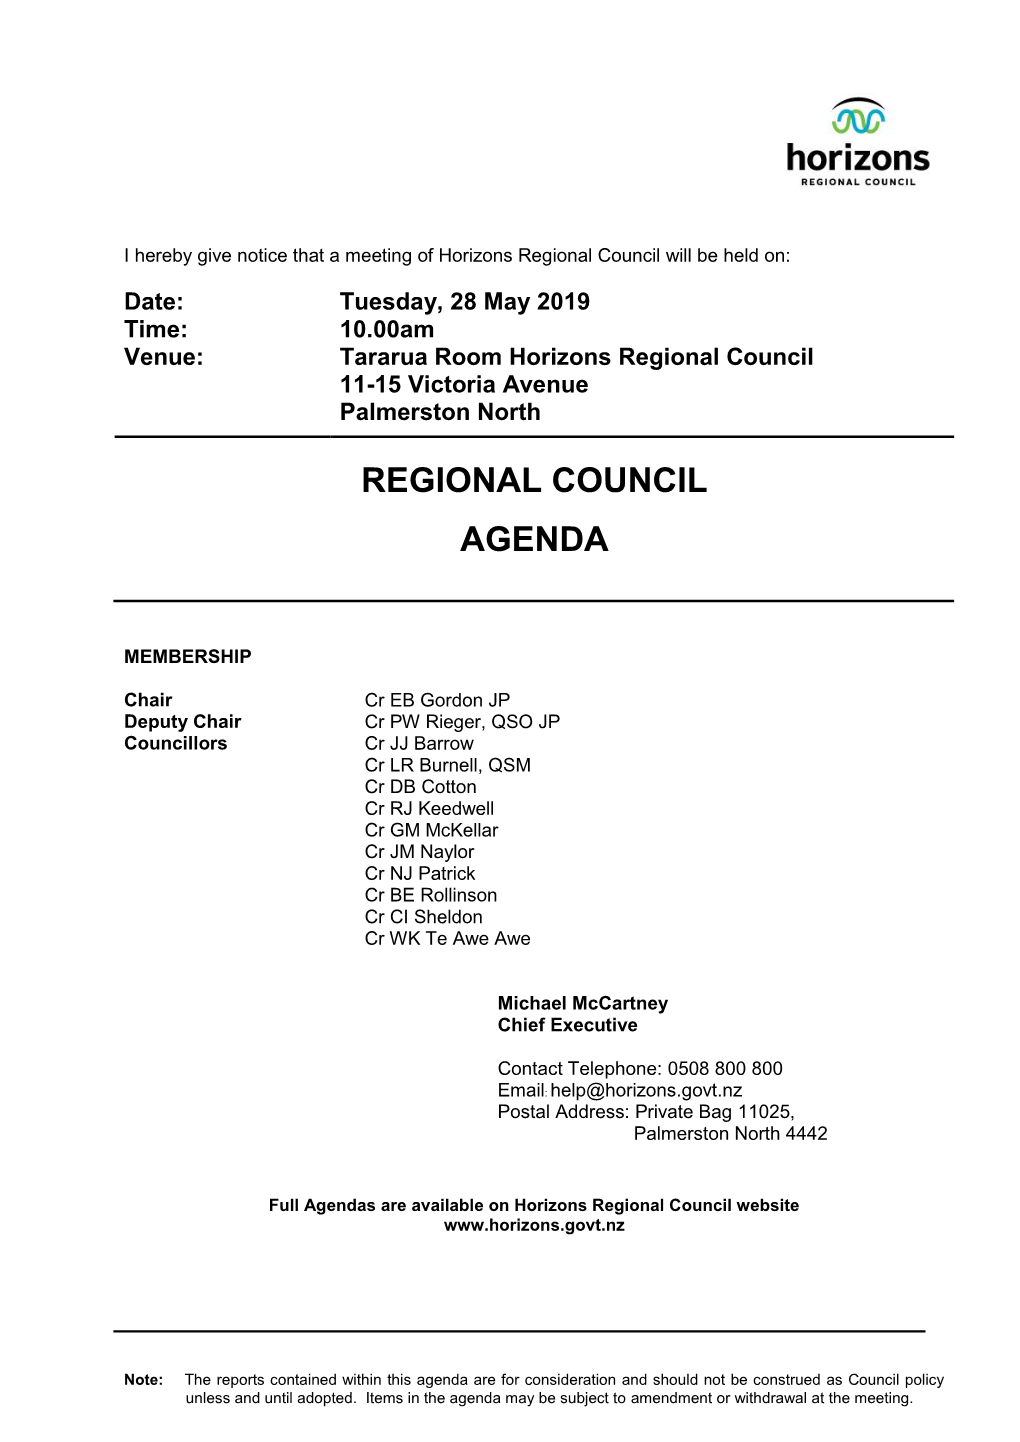 Agenda of Regional Council